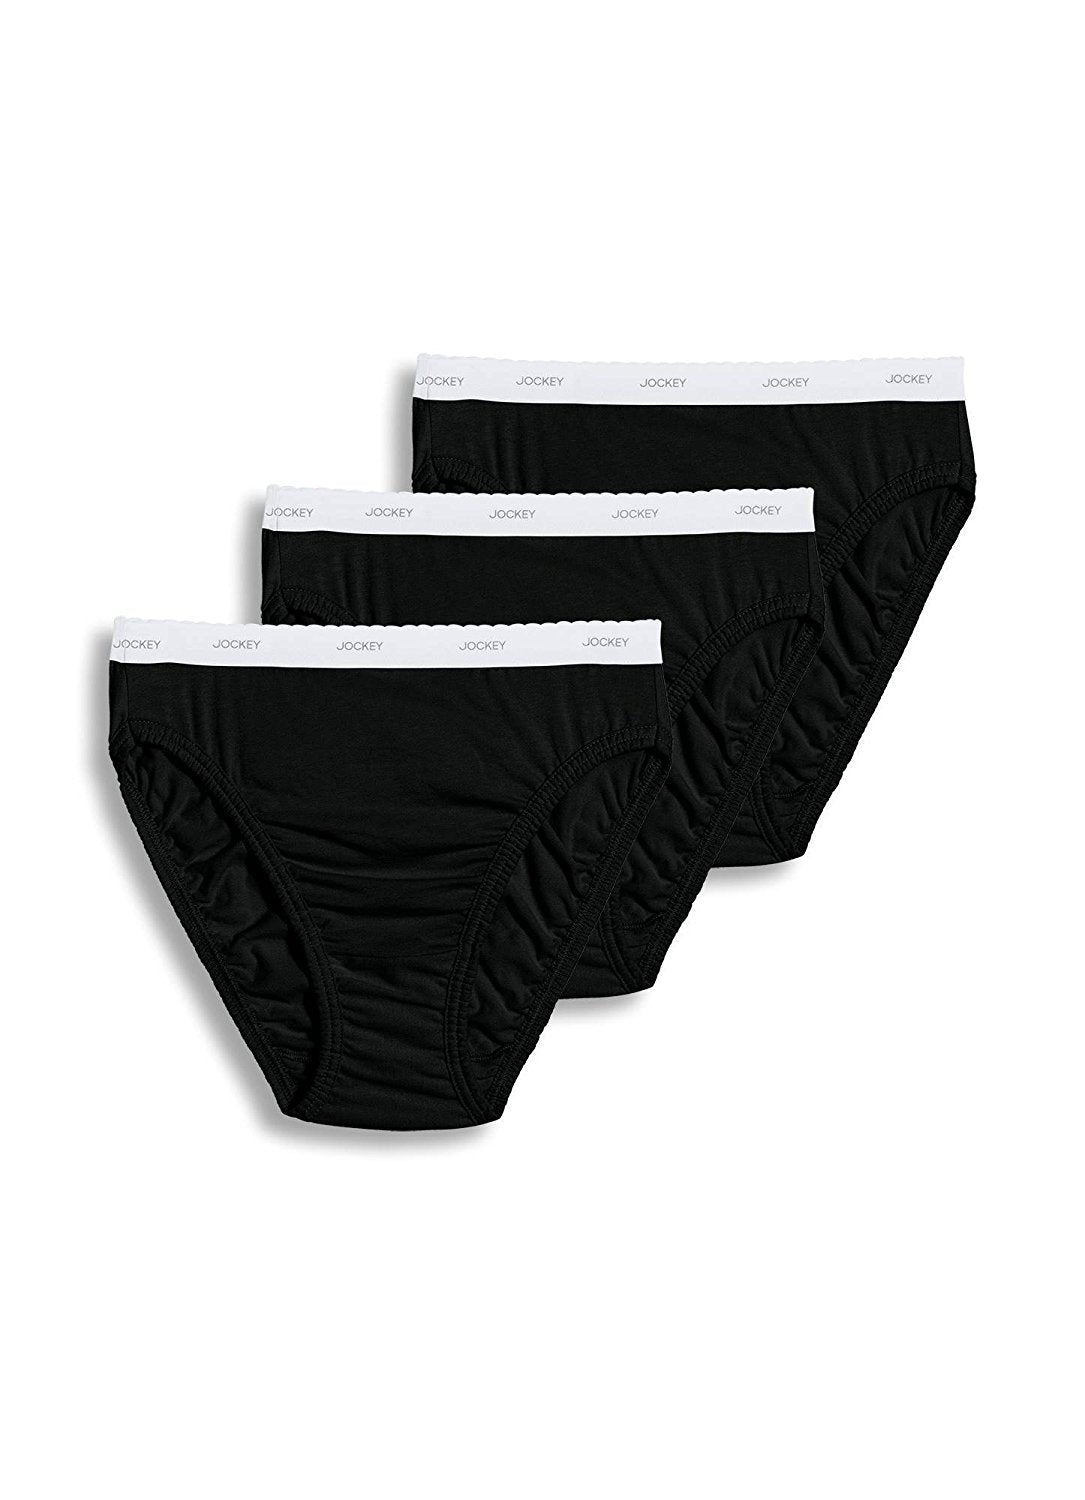 Jockey Women's Underwear Plus Size Elance French Cut - 3 Pack Size 10 (3XL)  